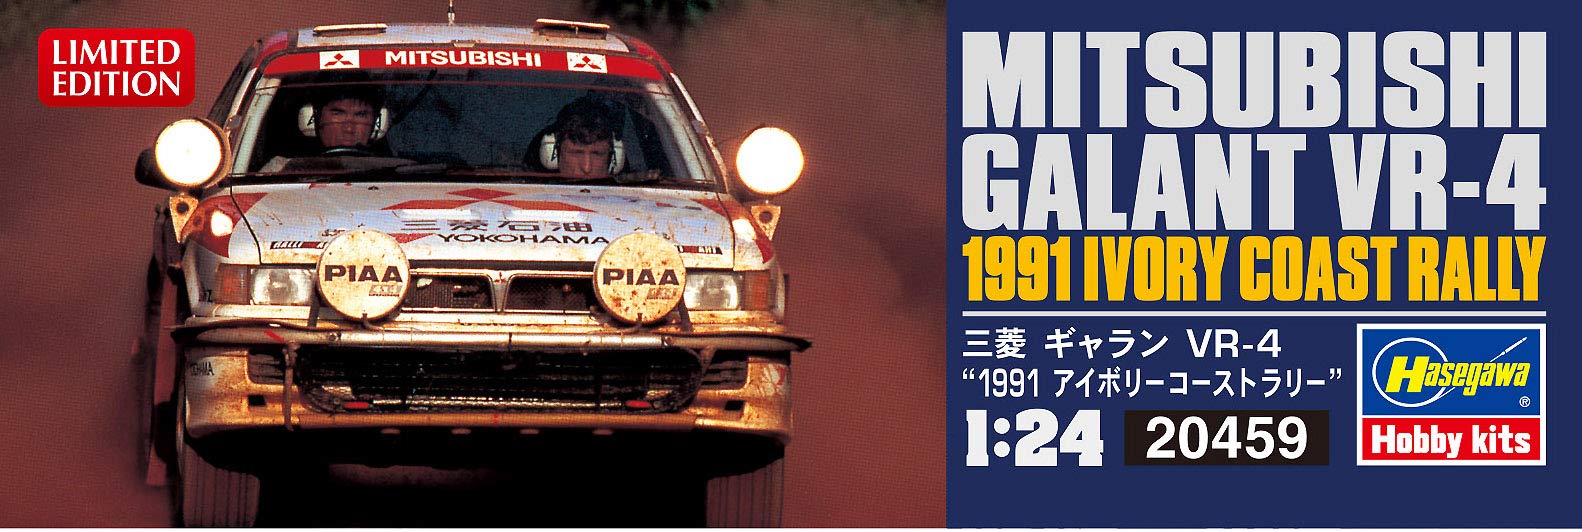 Hasegawa 20459 Mitsubishi Galant Vr-4 1991 Ivory Coast Rally 1/24 Plastic Car Model